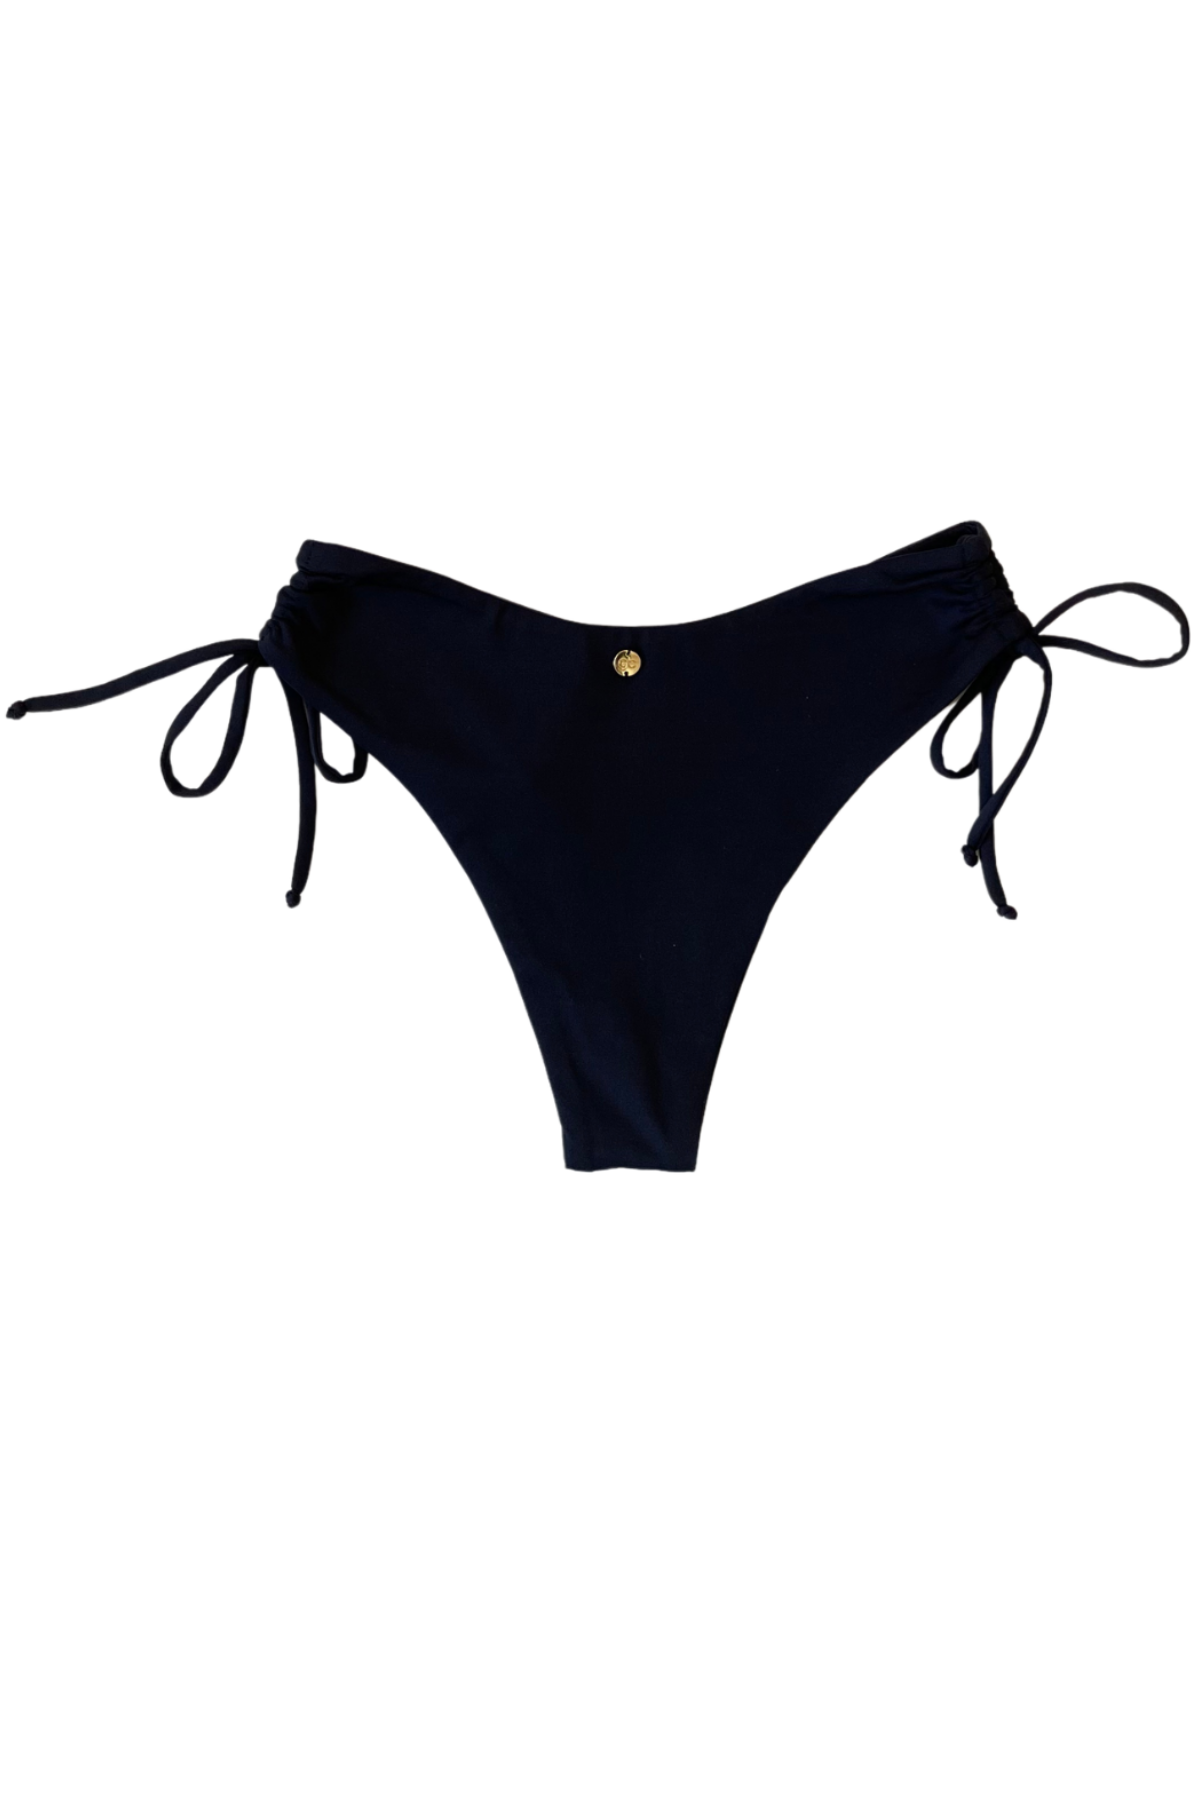 black Brazilian side scrunch bikini bottoms